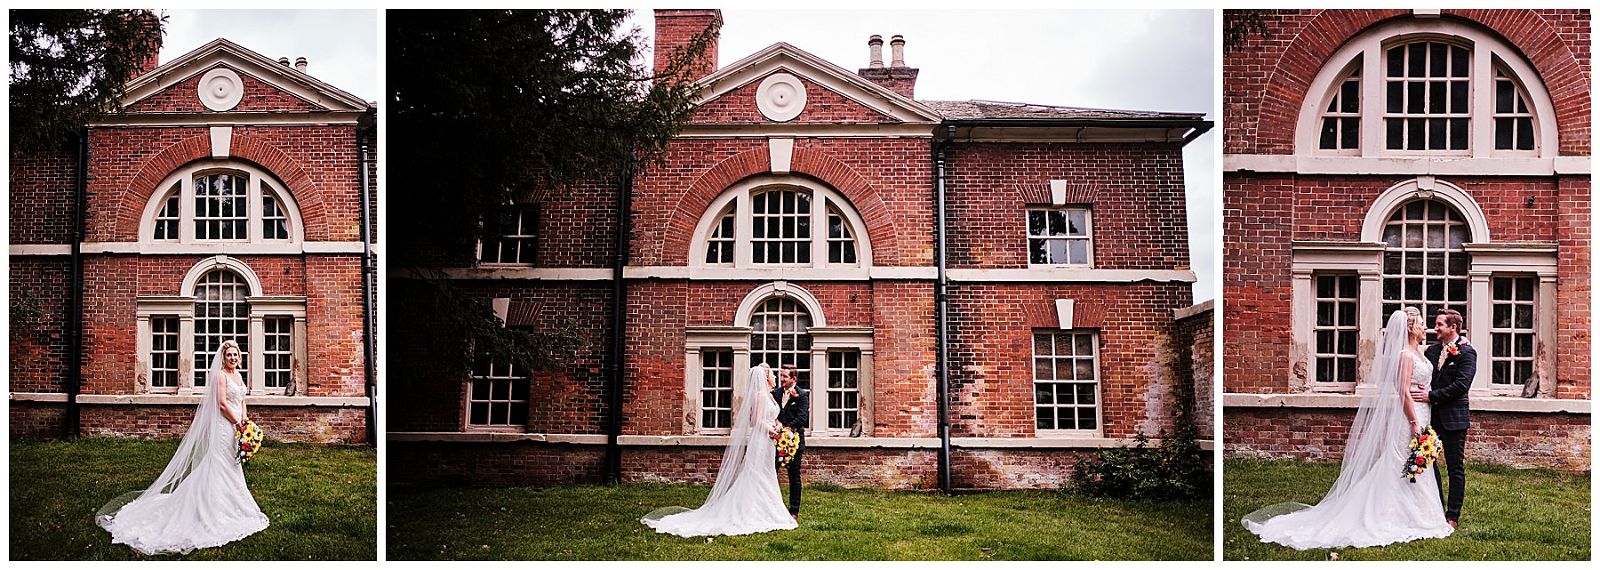 Creative documentary wedding photography at Swinfen Hall by Lichfield Wedding Photographer Stuart James